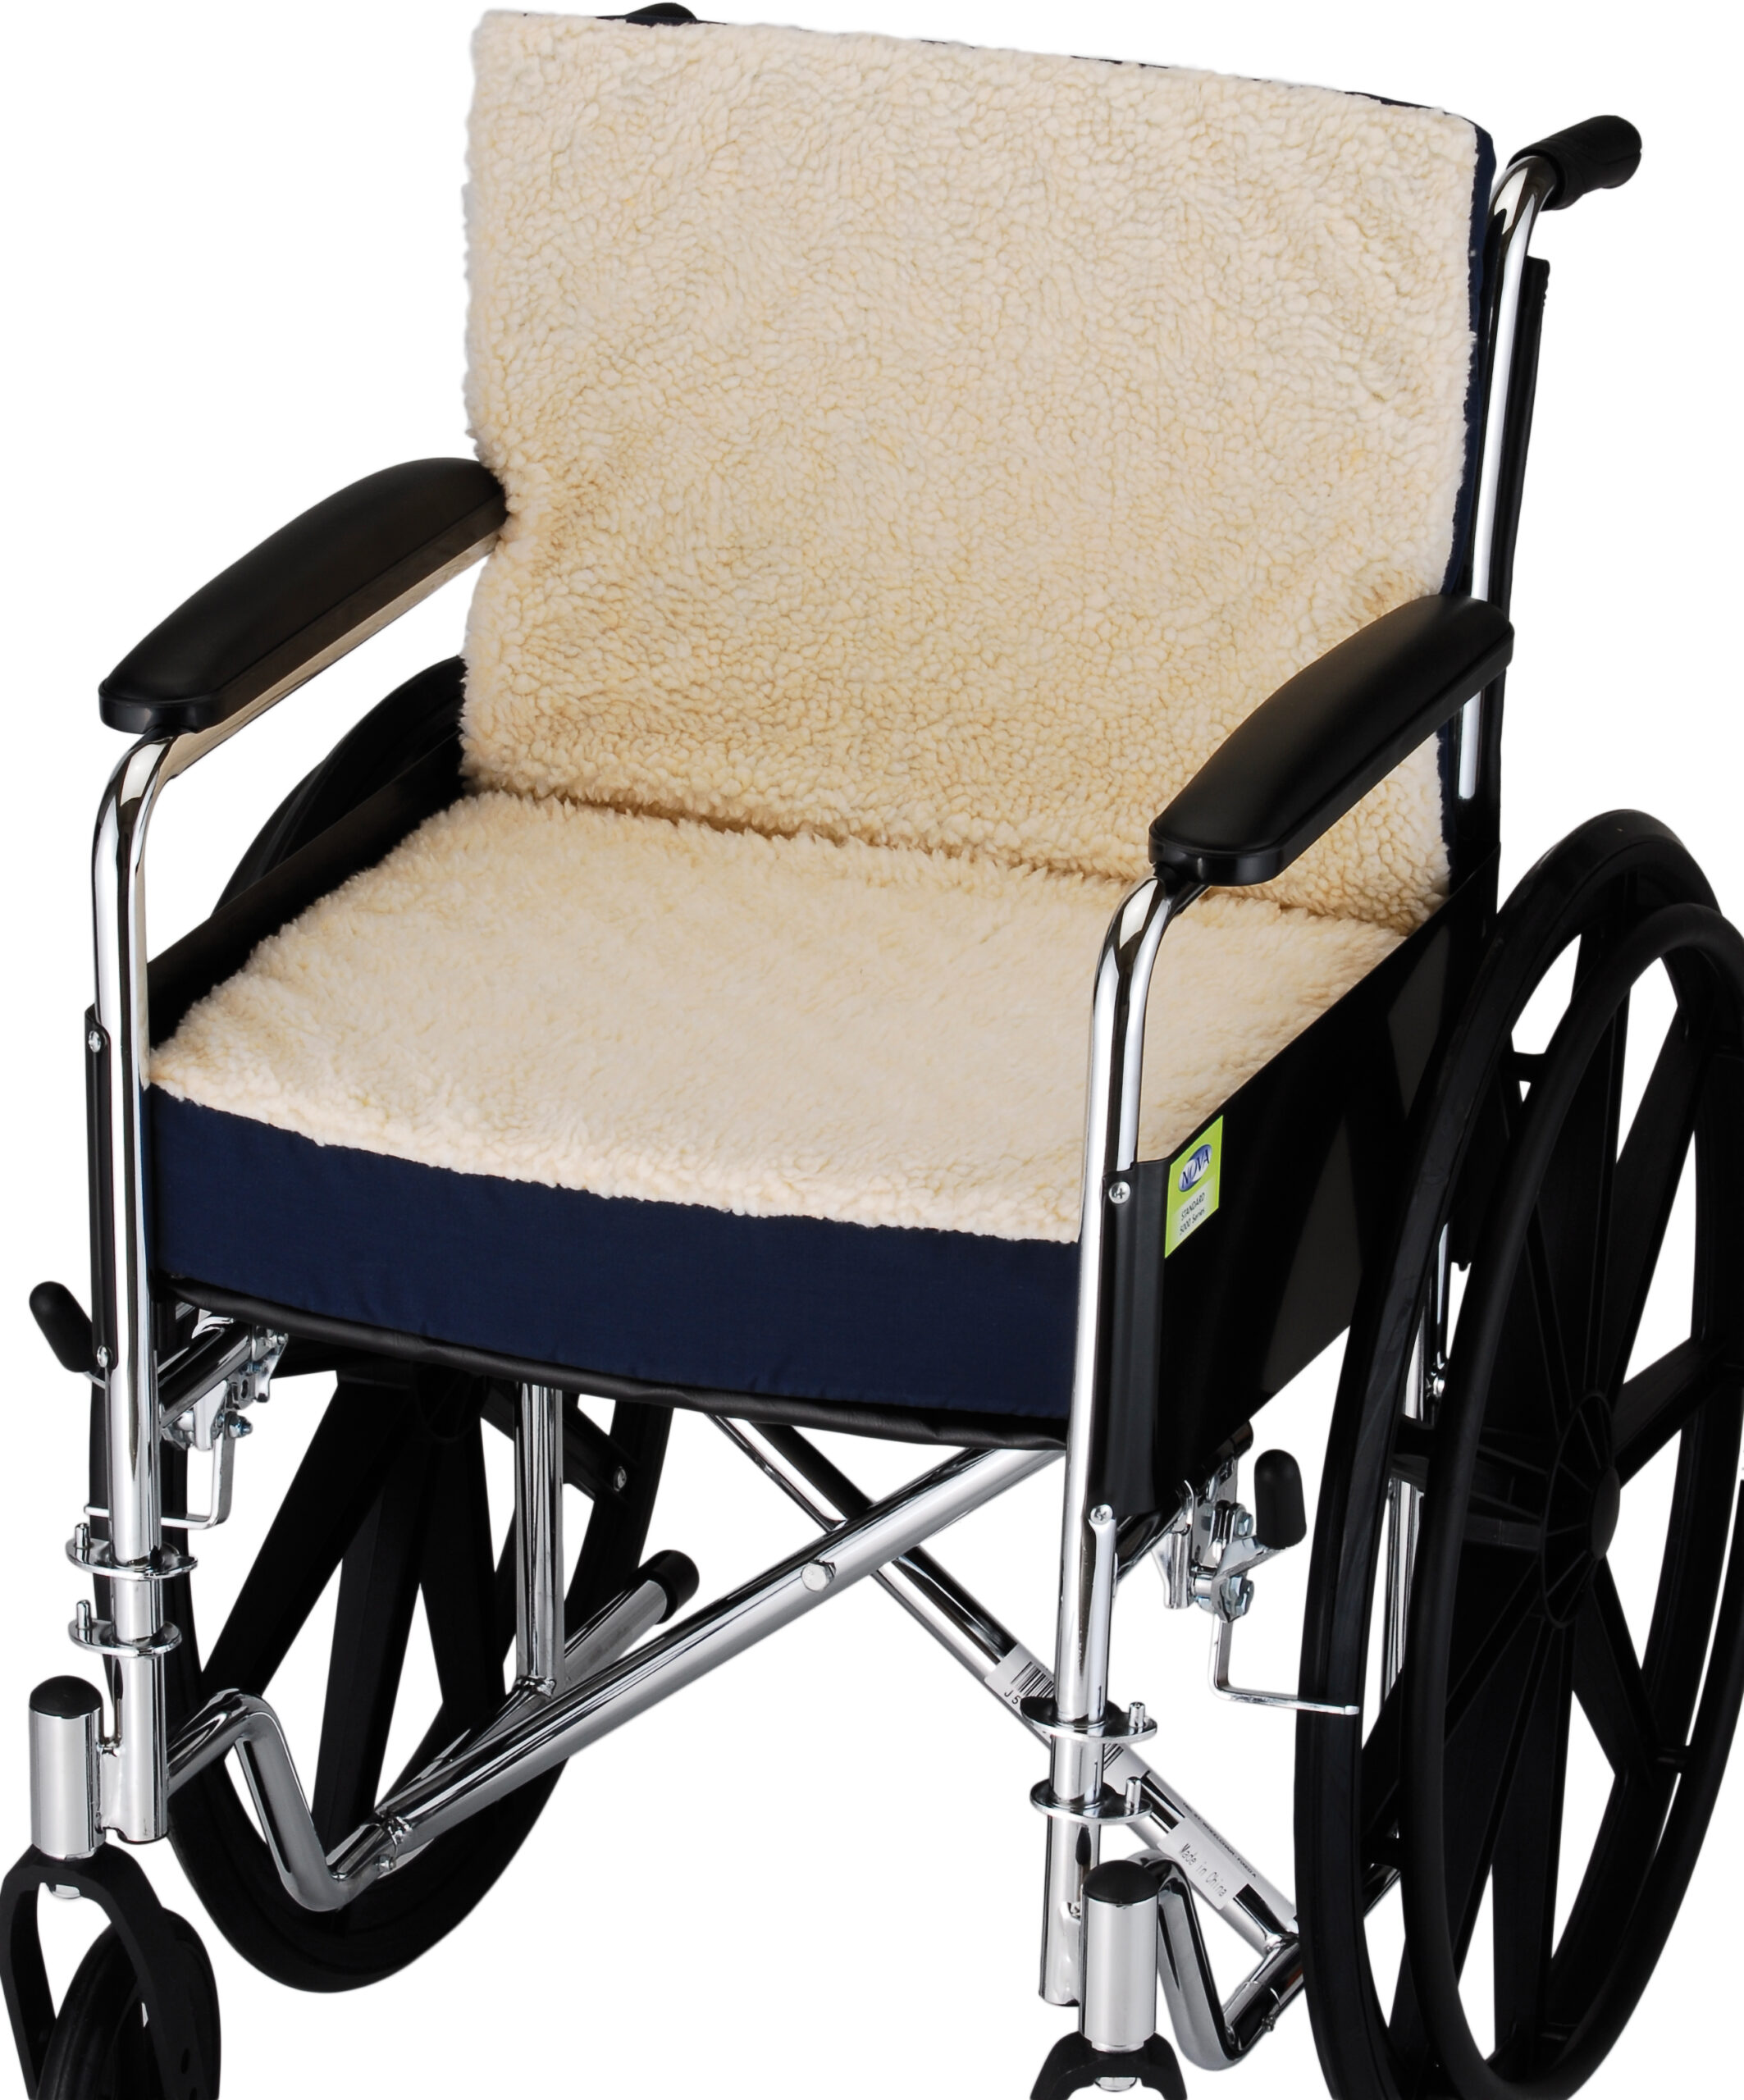 Isch-Dish Thin Cushion wheelchair Covers on Sale